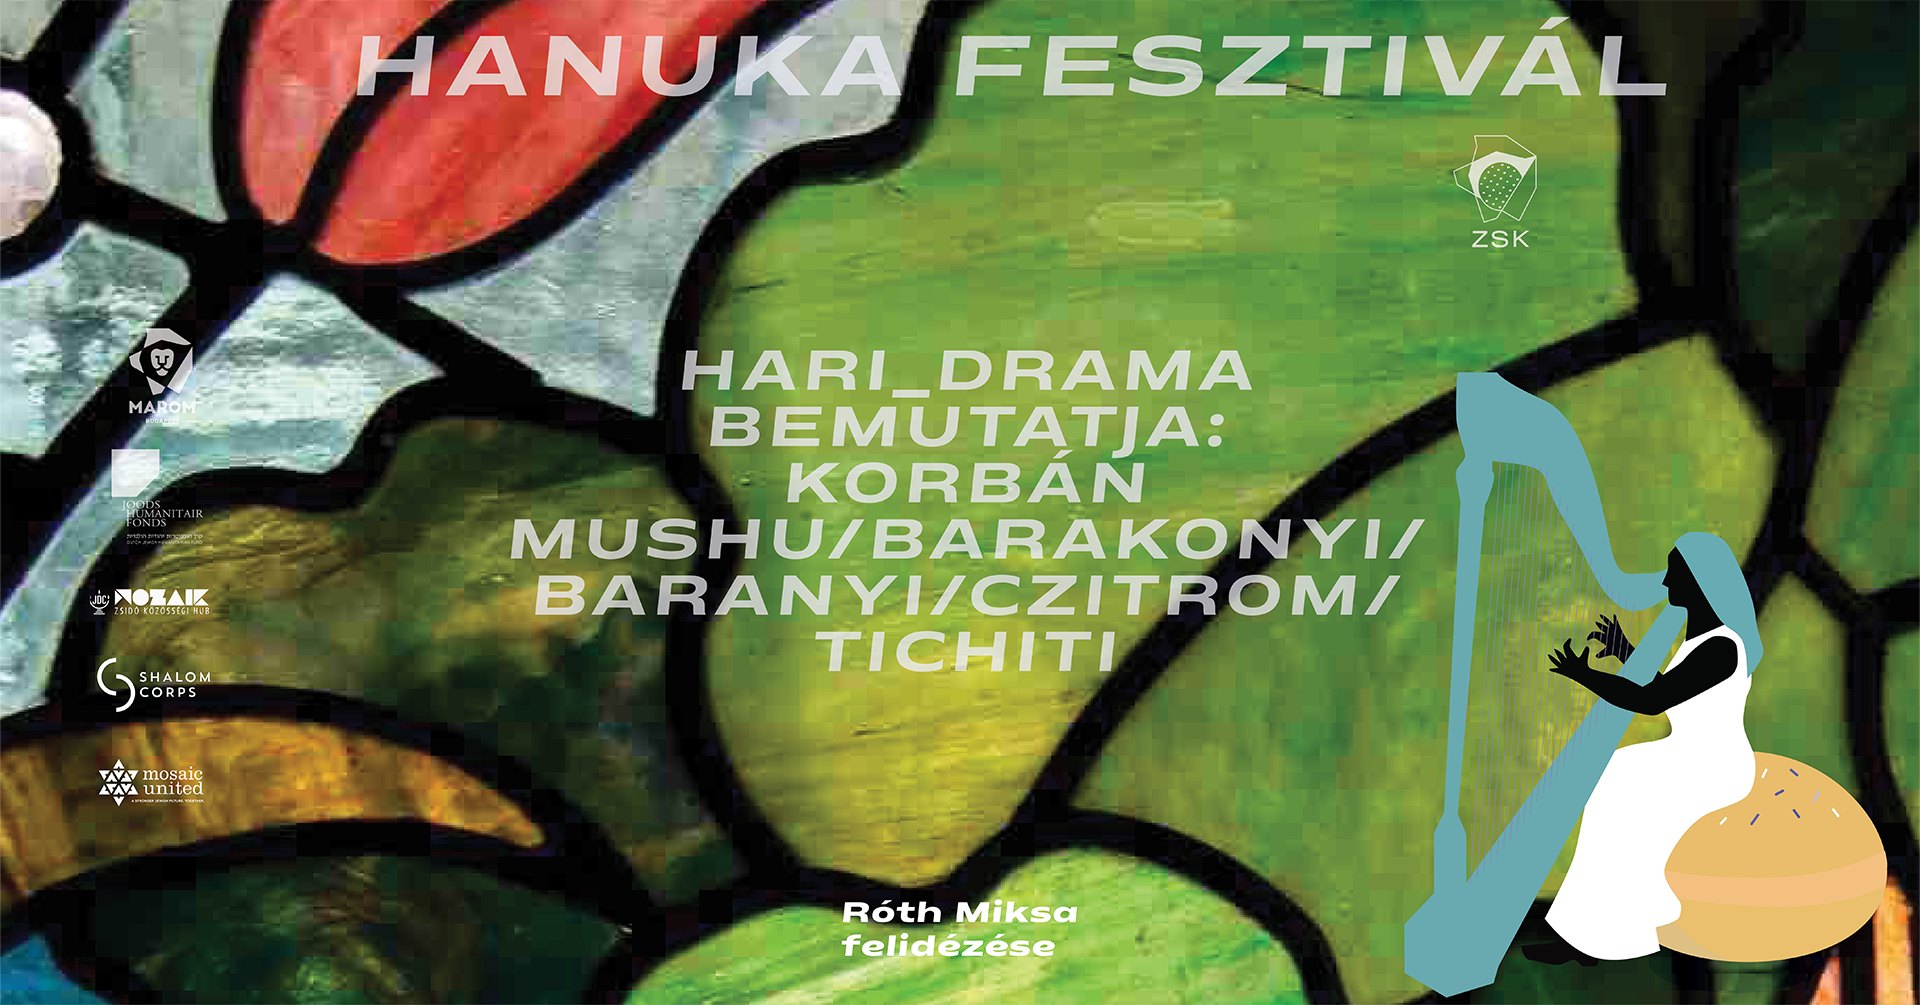 Hanukkah Festival - hari drama concert